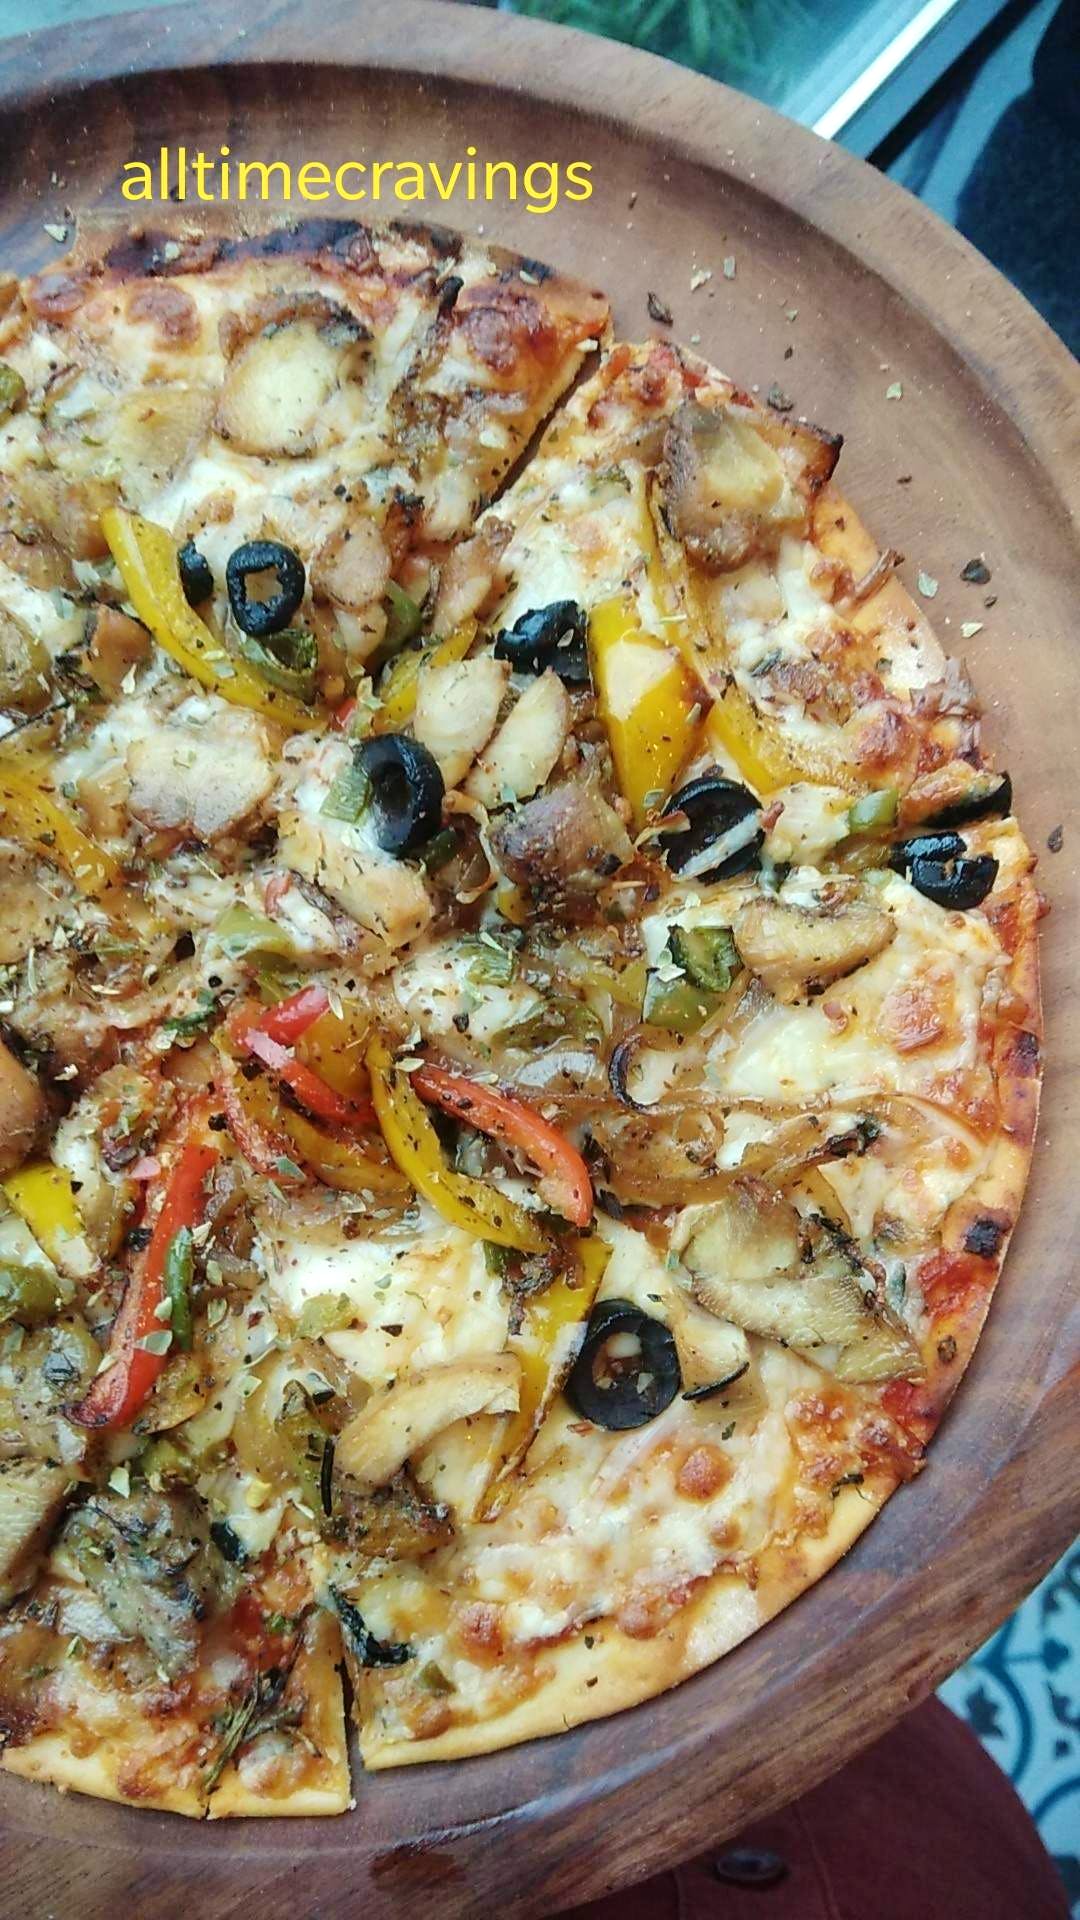 Dish,Pizza,Food,Cuisine,Pizza cheese,California-style pizza,Ingredient,Flatbread,Italian food,Strata